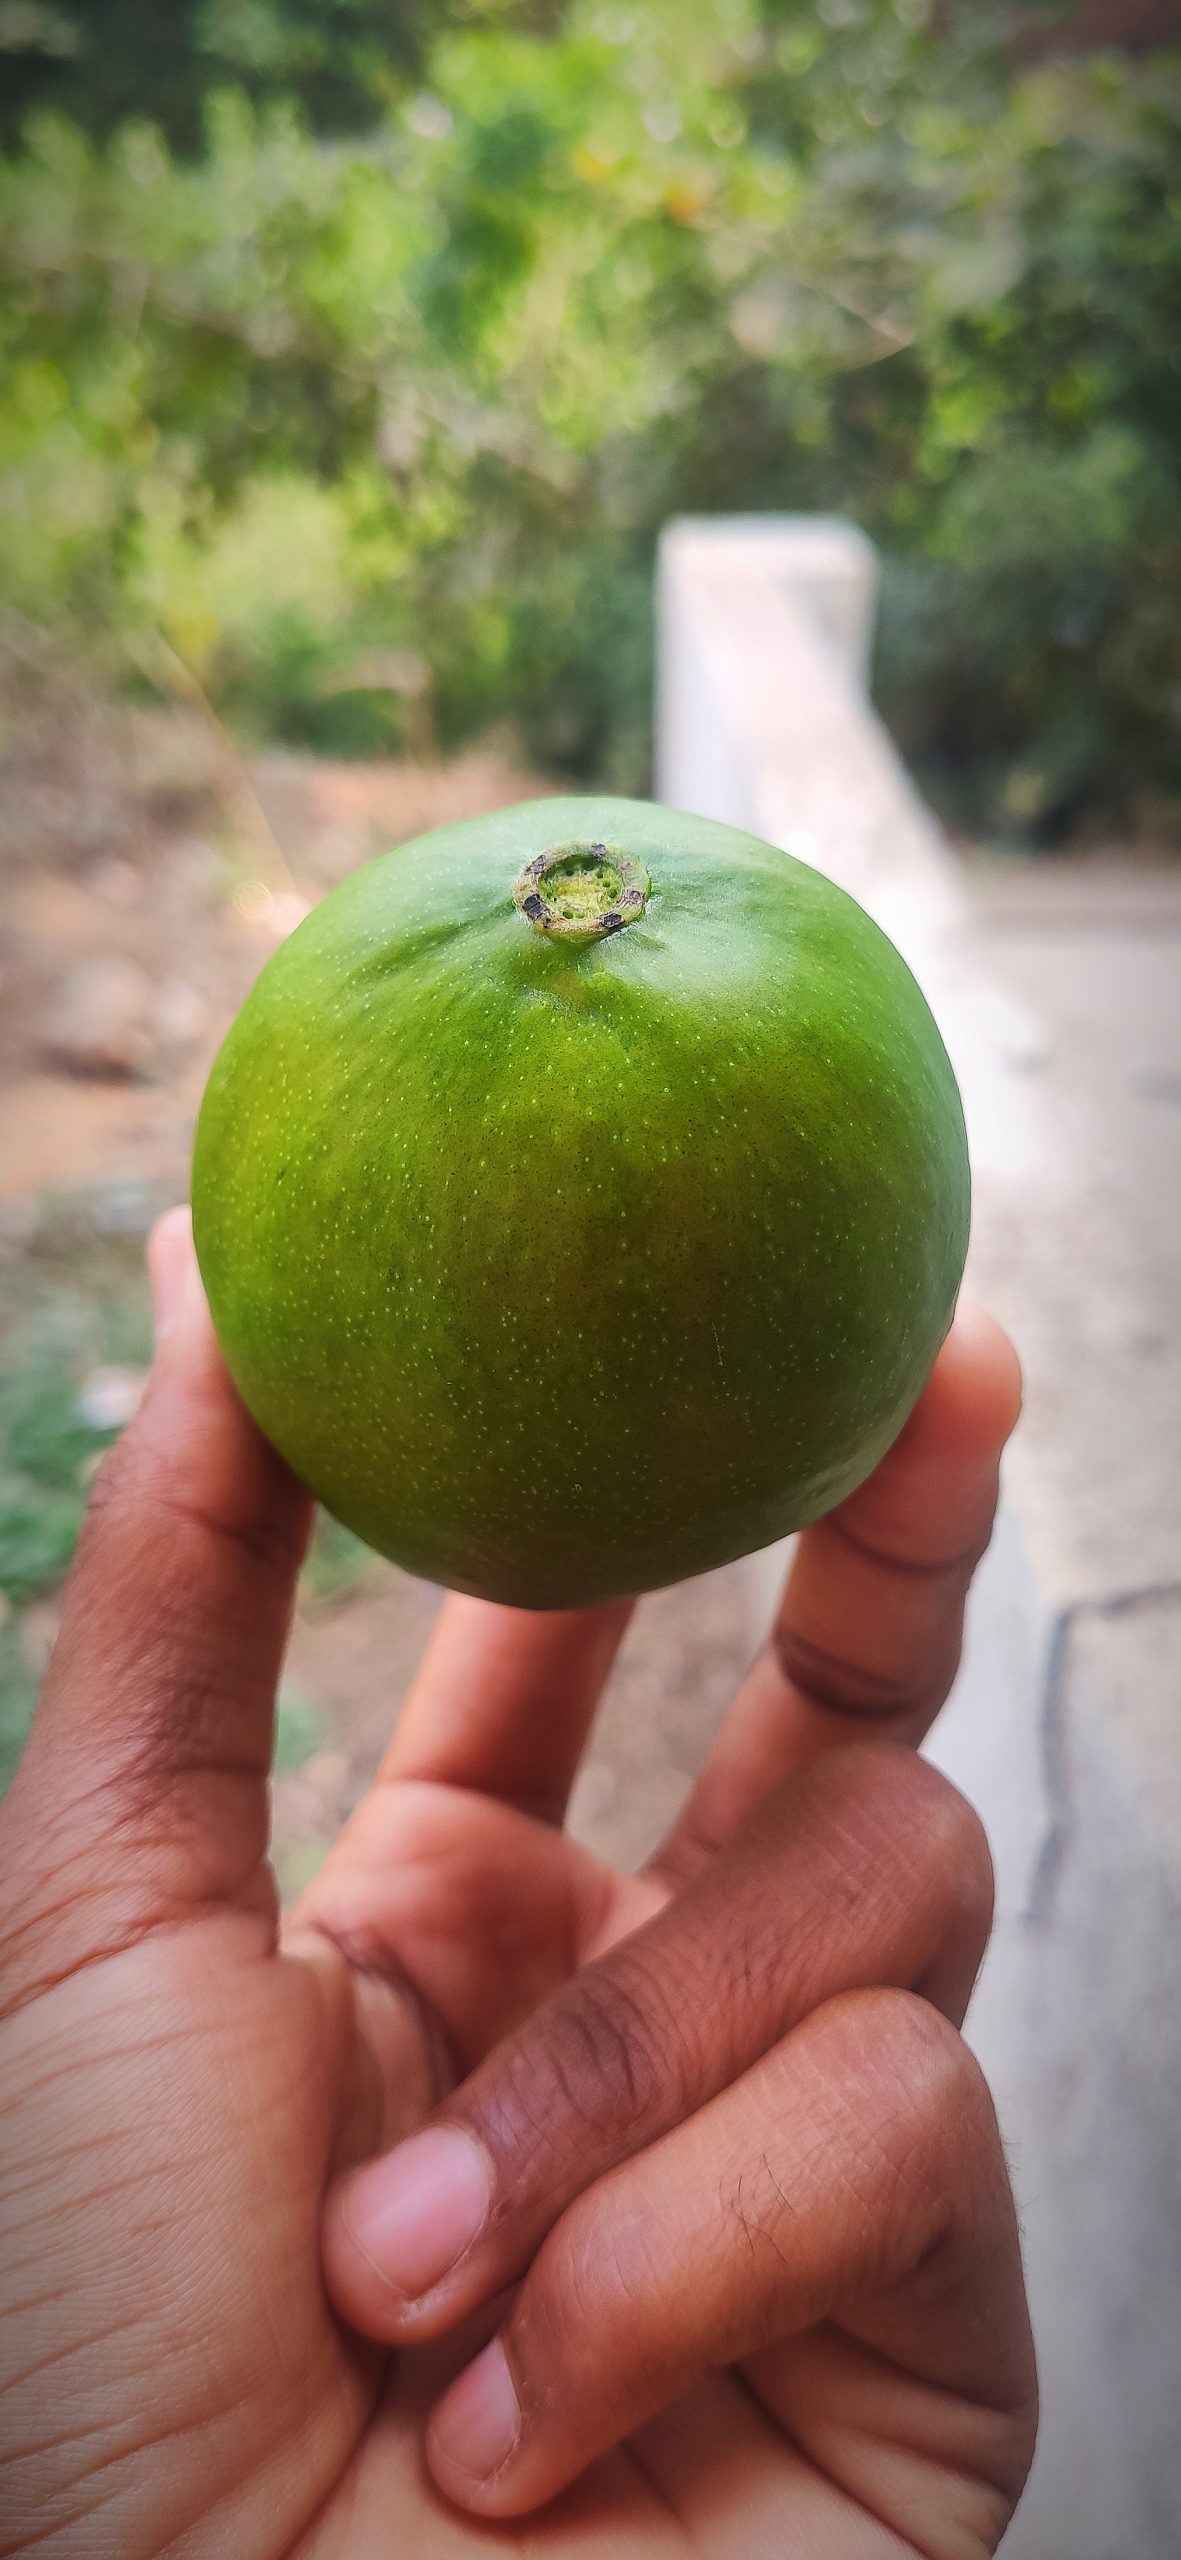 Holding a green mango